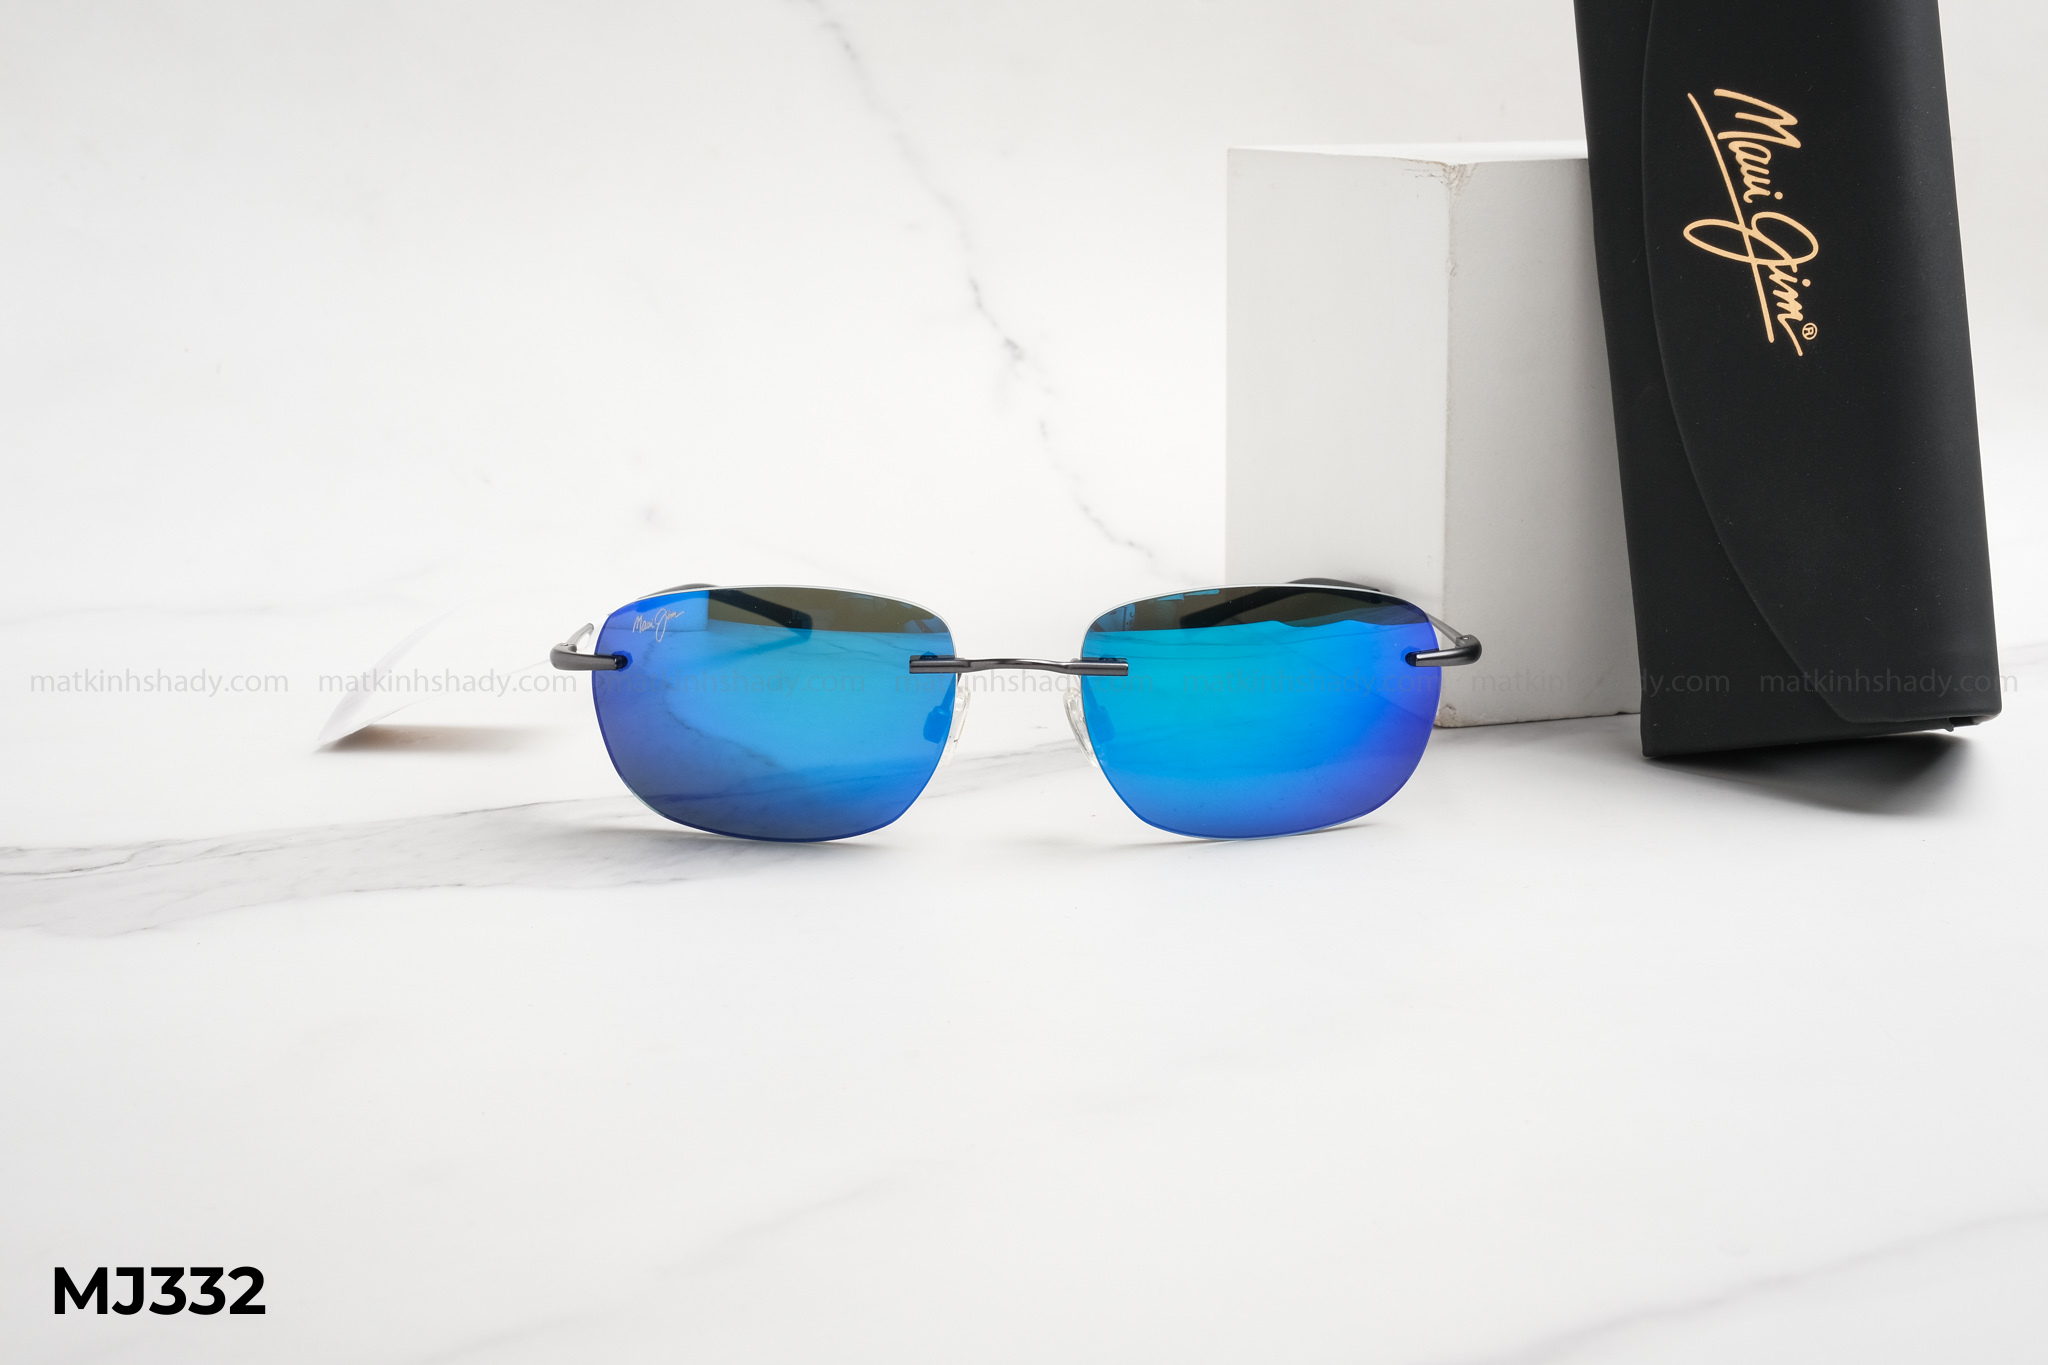  Maui Jim Eyewear - Sunglasses - MJ332 